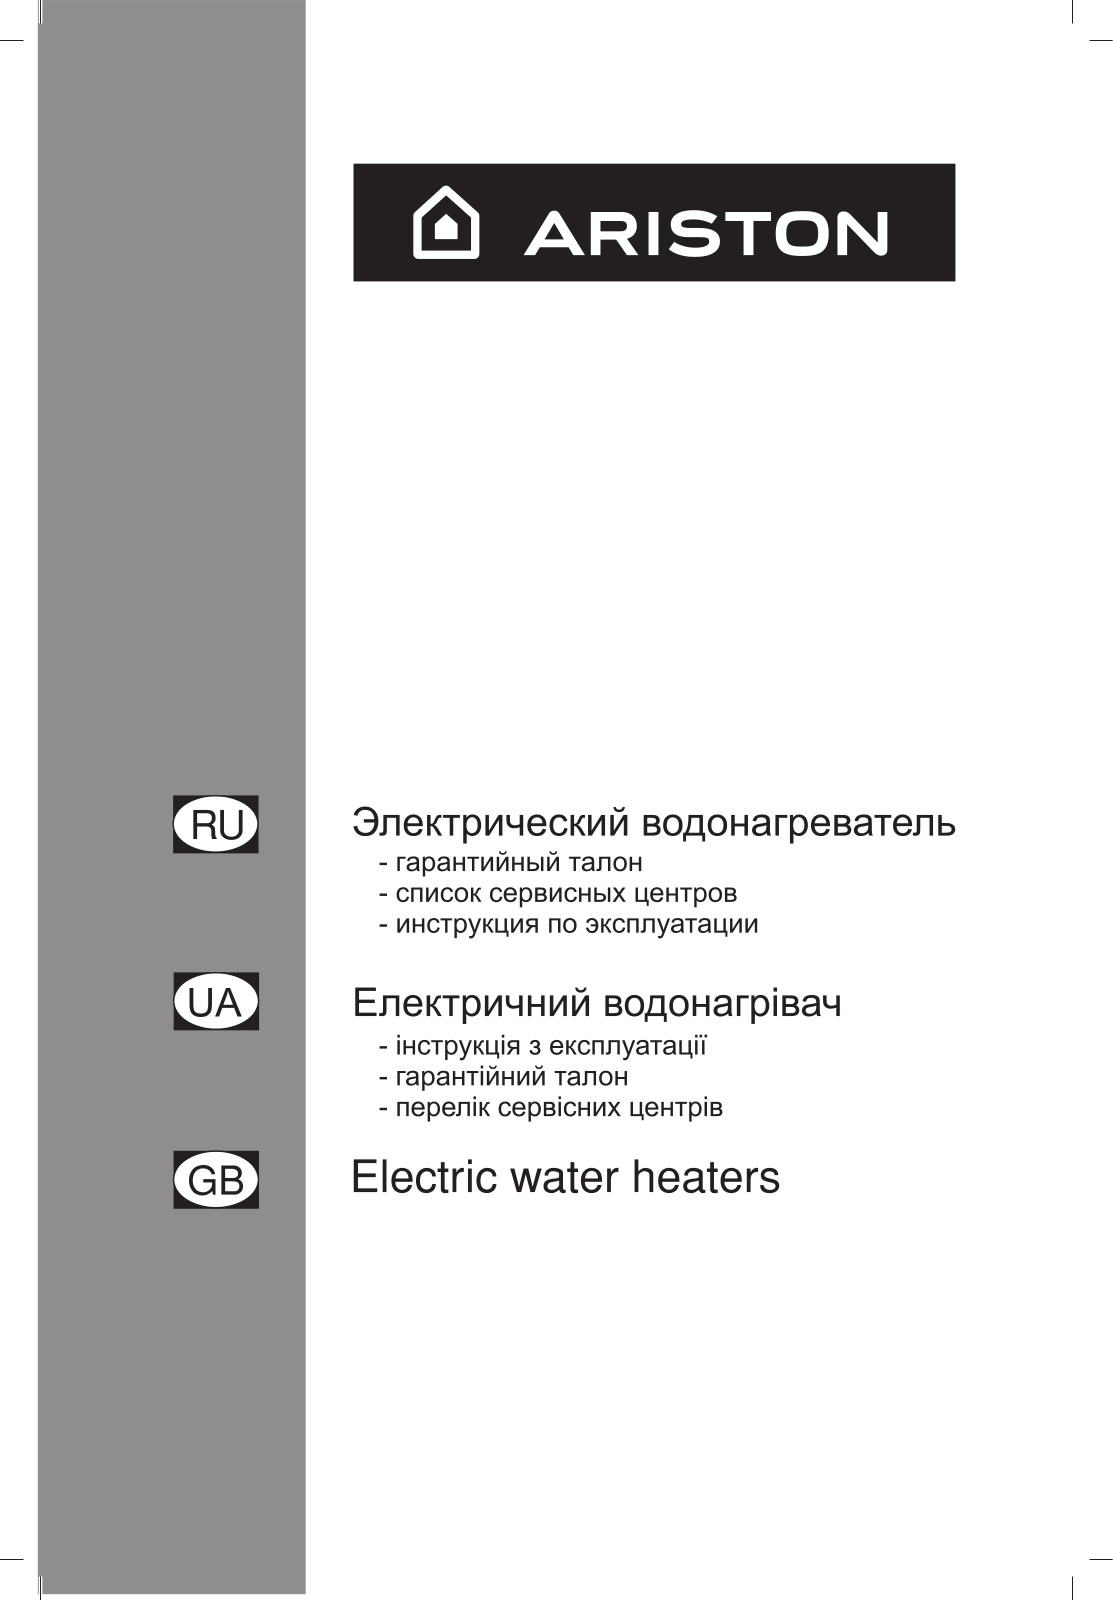 Ariston ABS PRO PLUS POWER SLIM User Manual